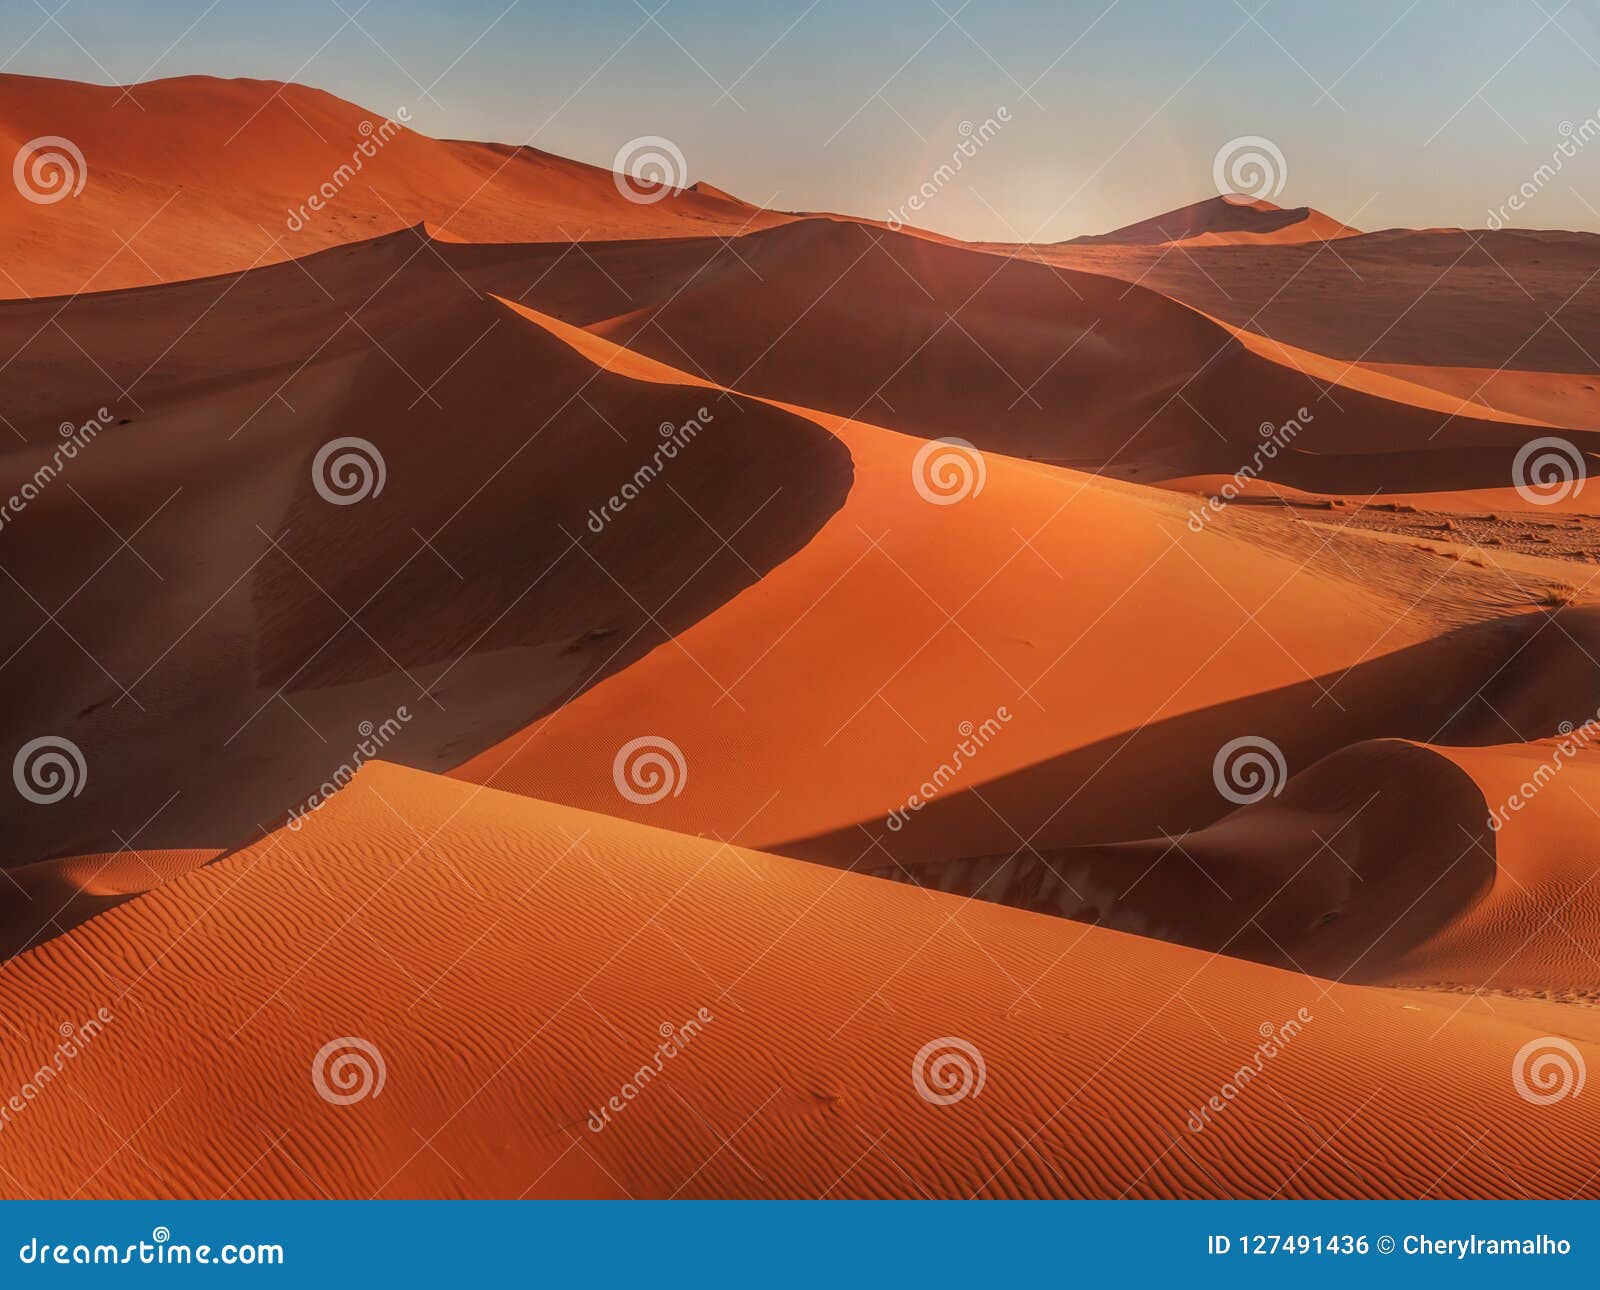 Sunrise On The Red Sand Dunes